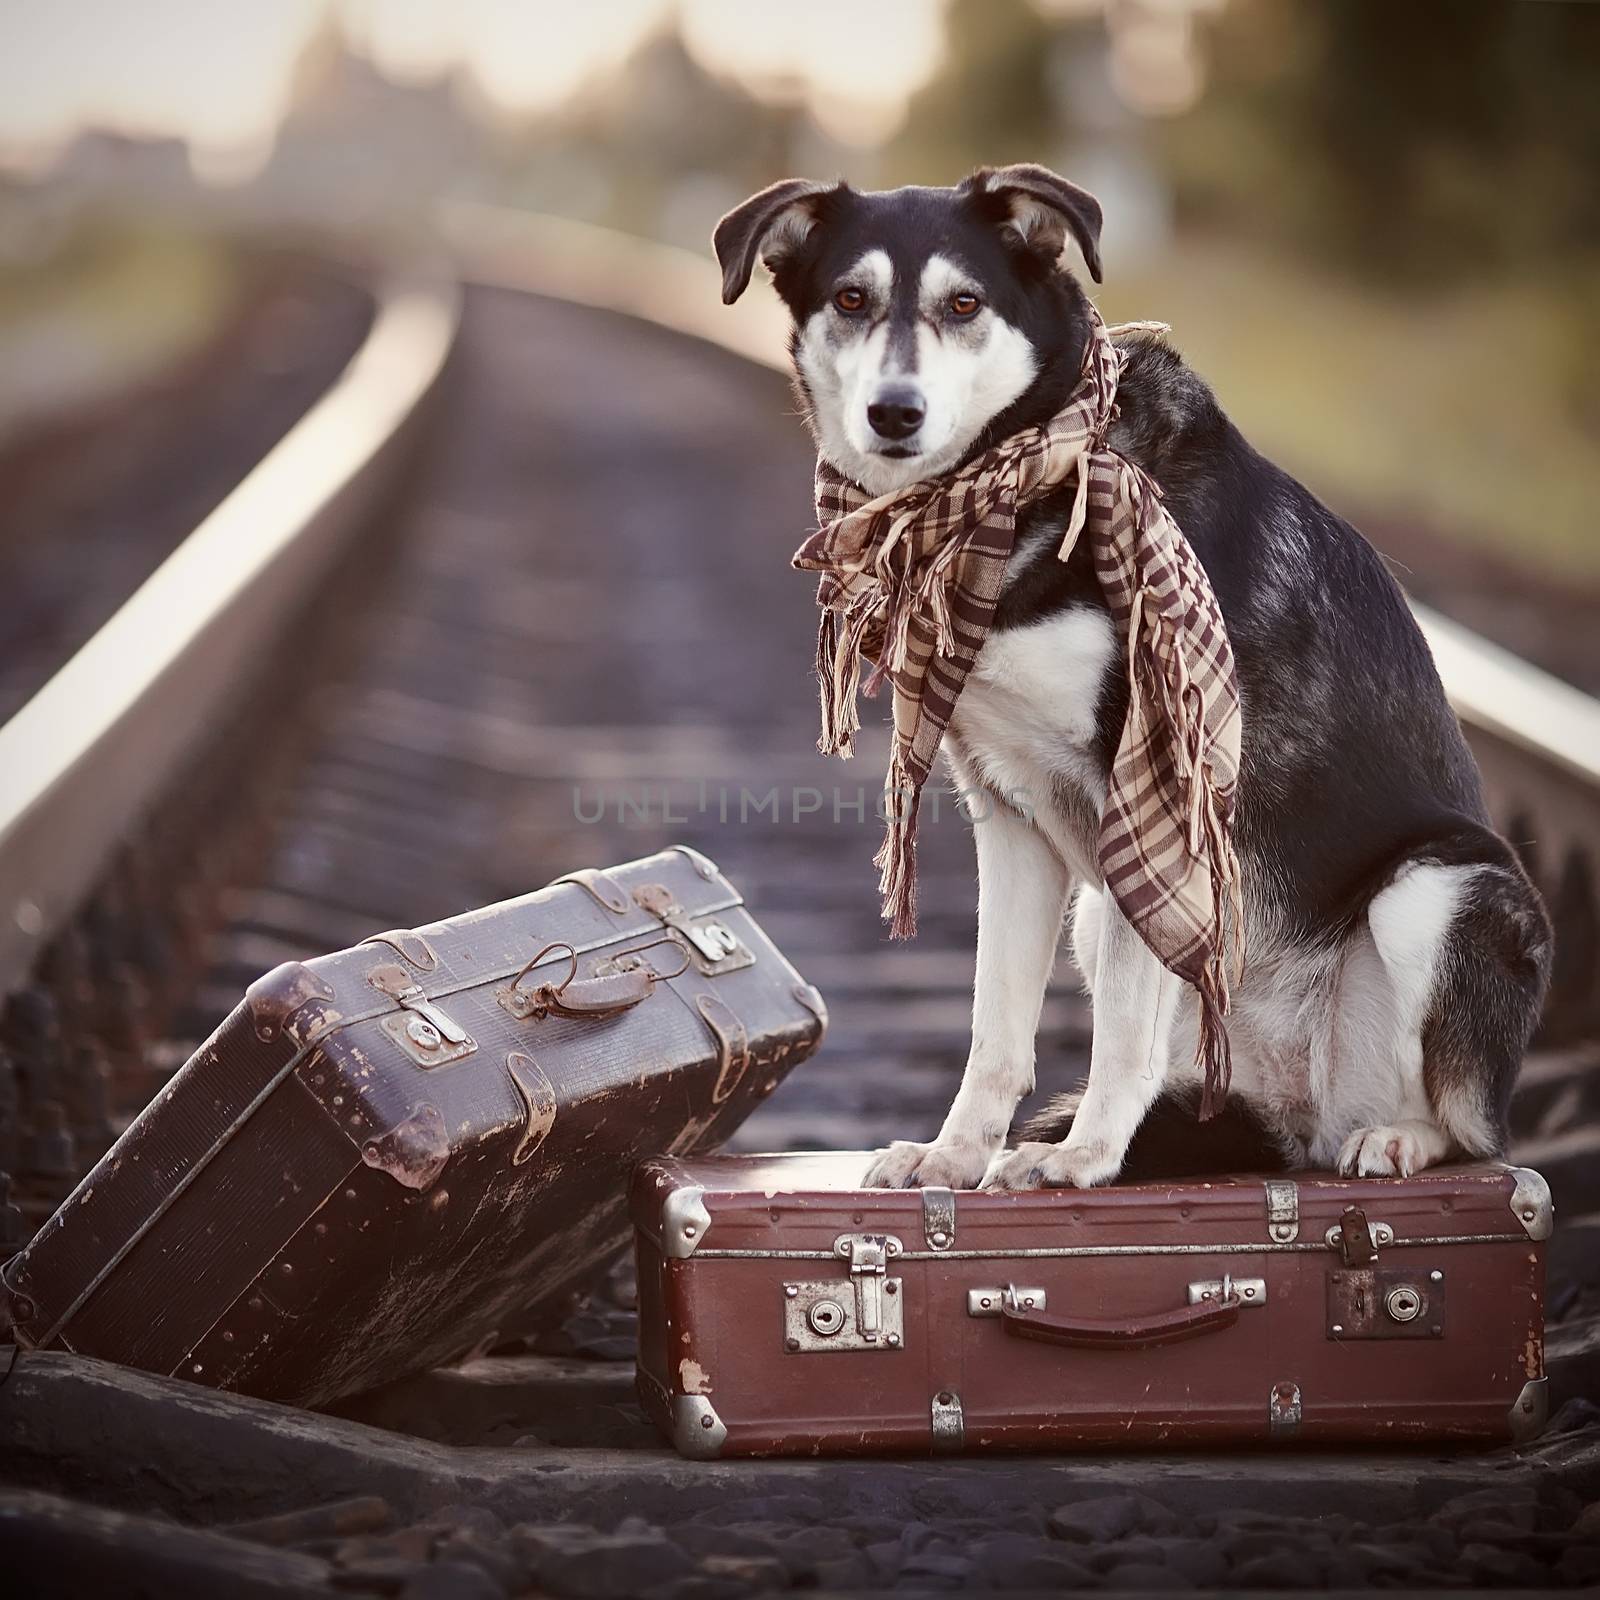 The dog sits on a suitcase on rails by Azaliya